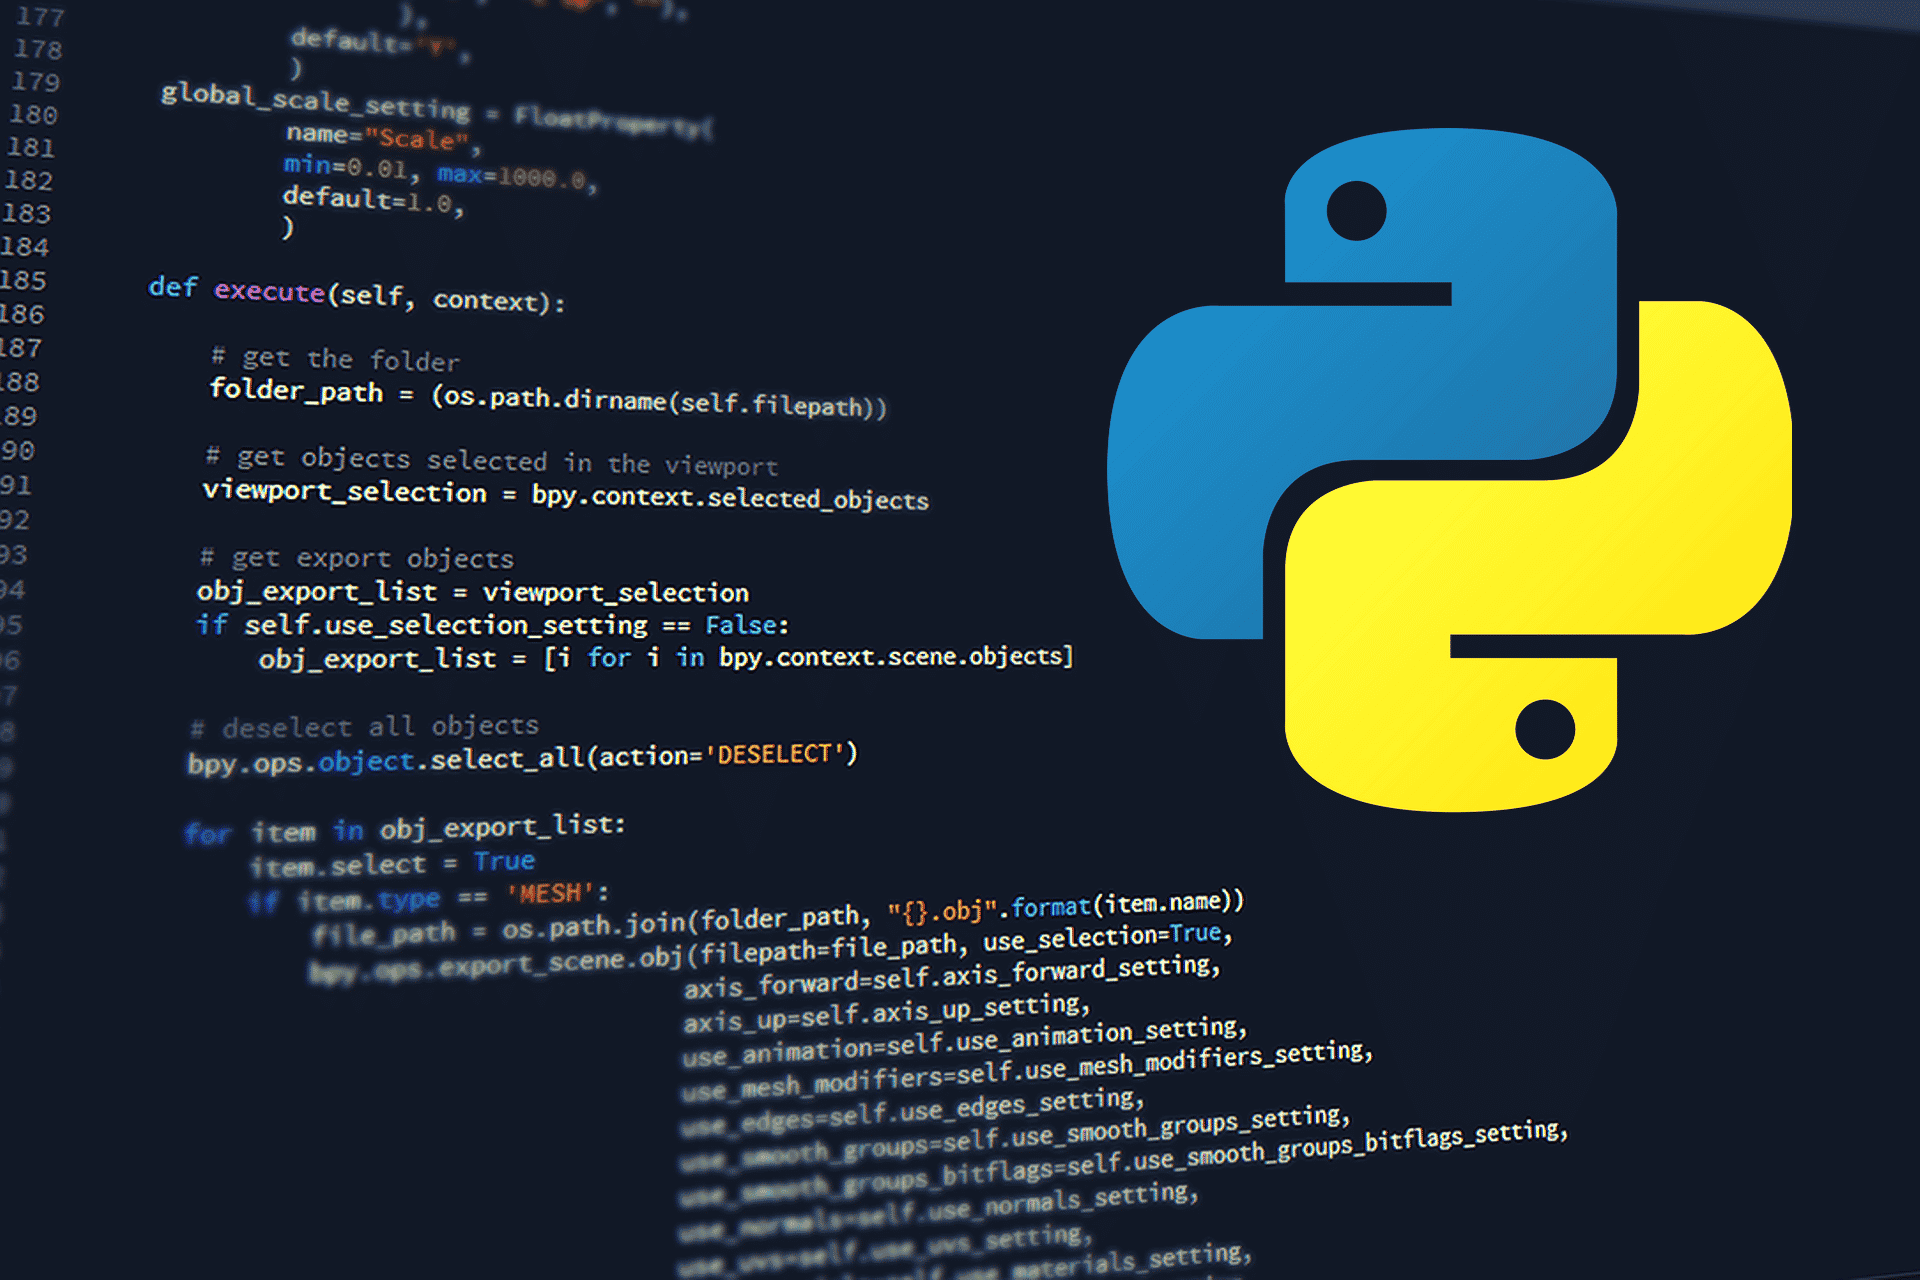 Python game codes. Python. Питон язык программирования. Программирование Пайтон. Программирование на Python.